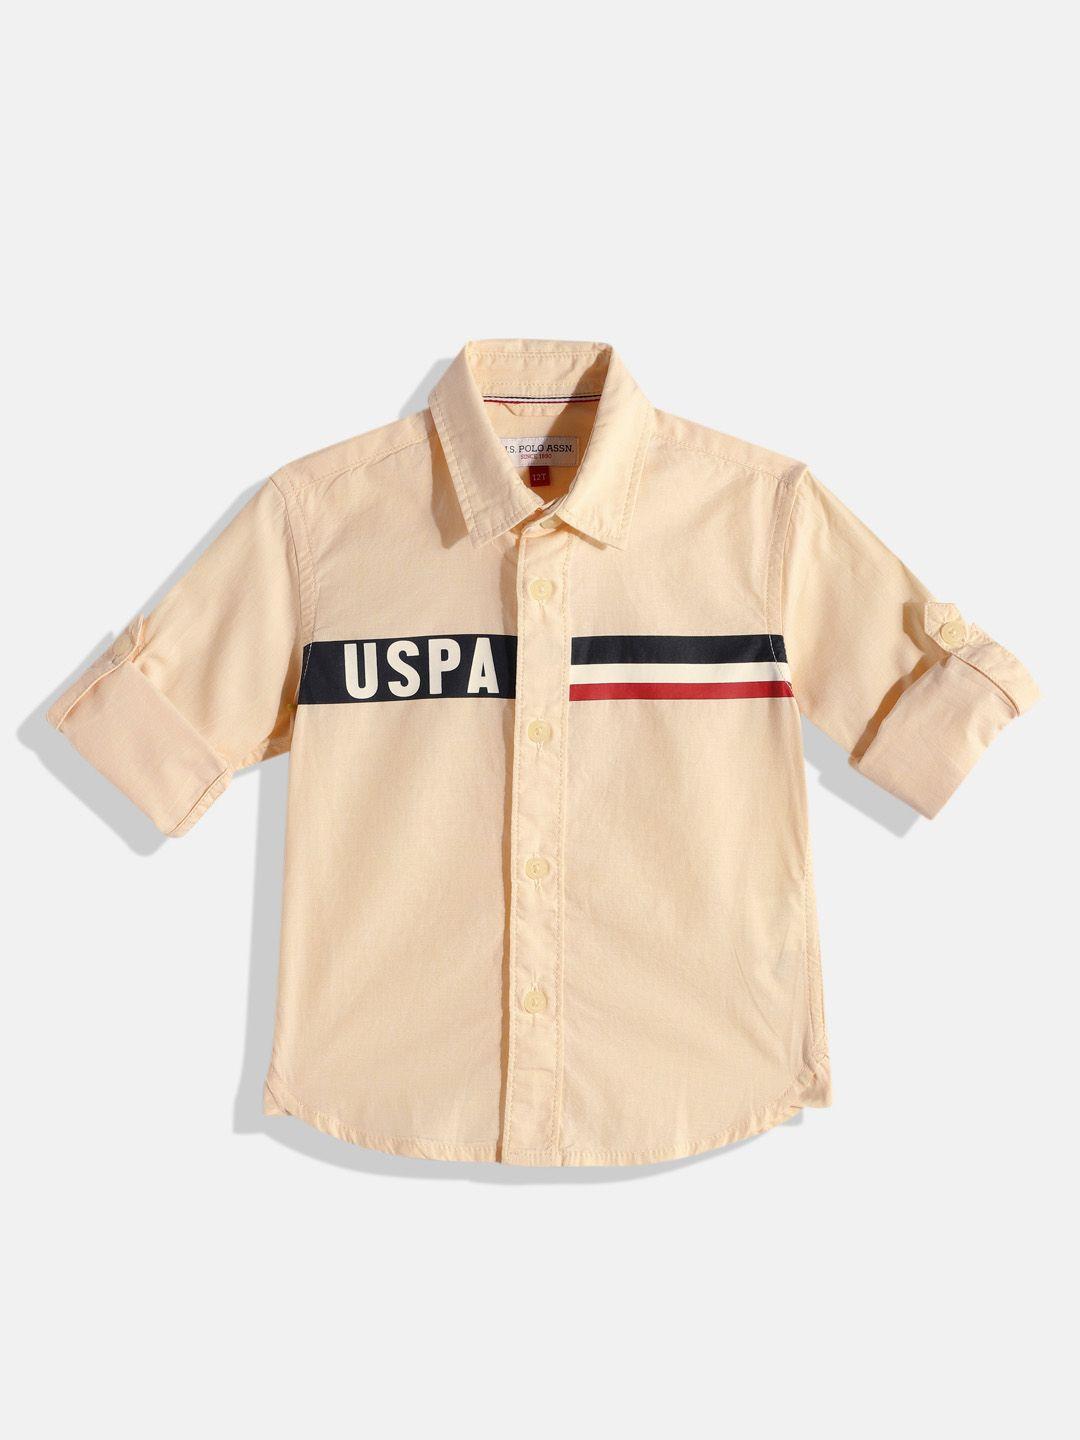 u.s. polo assn. kids boys printed pure cotton casual shirt